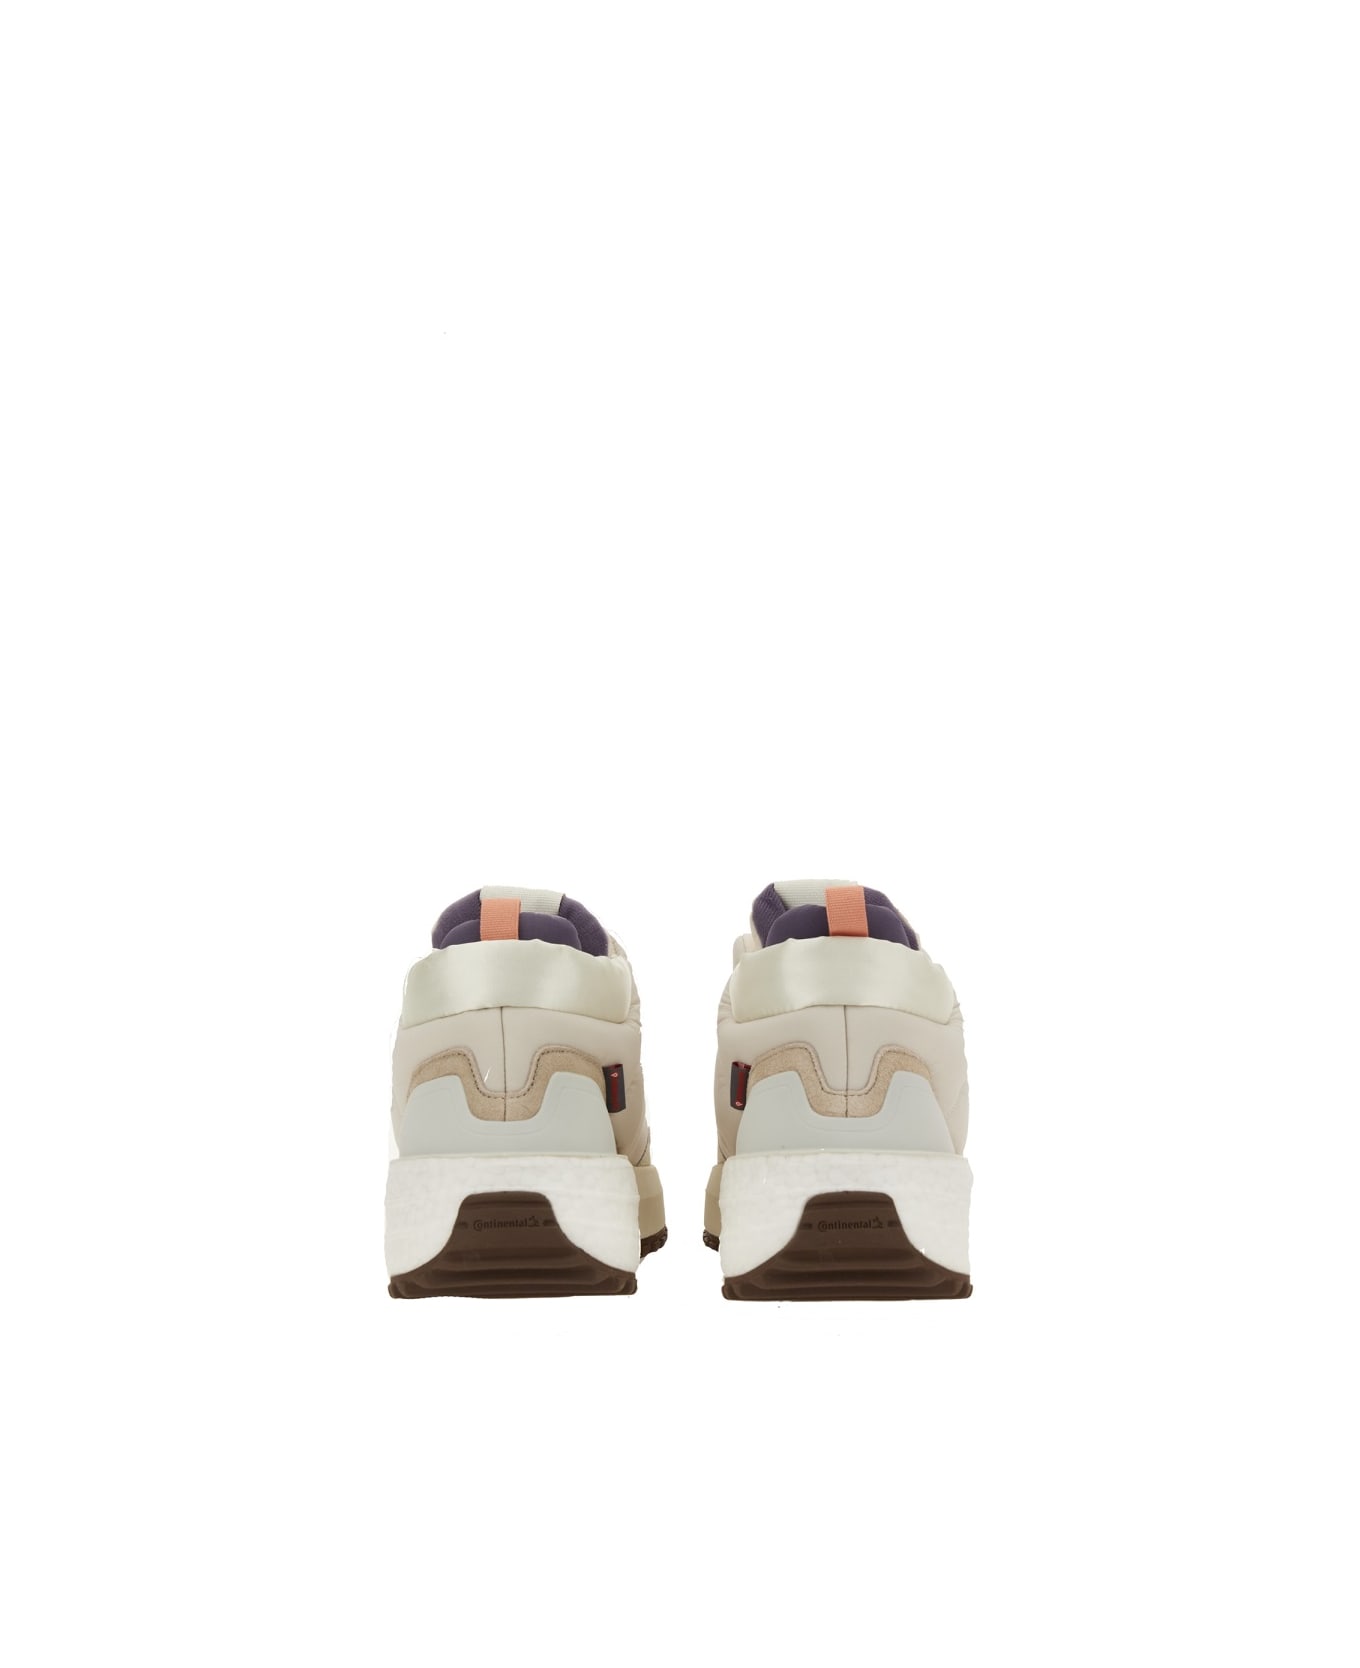 Adidas Originals Sneaker "x_plrboost" - GREY スニーカー